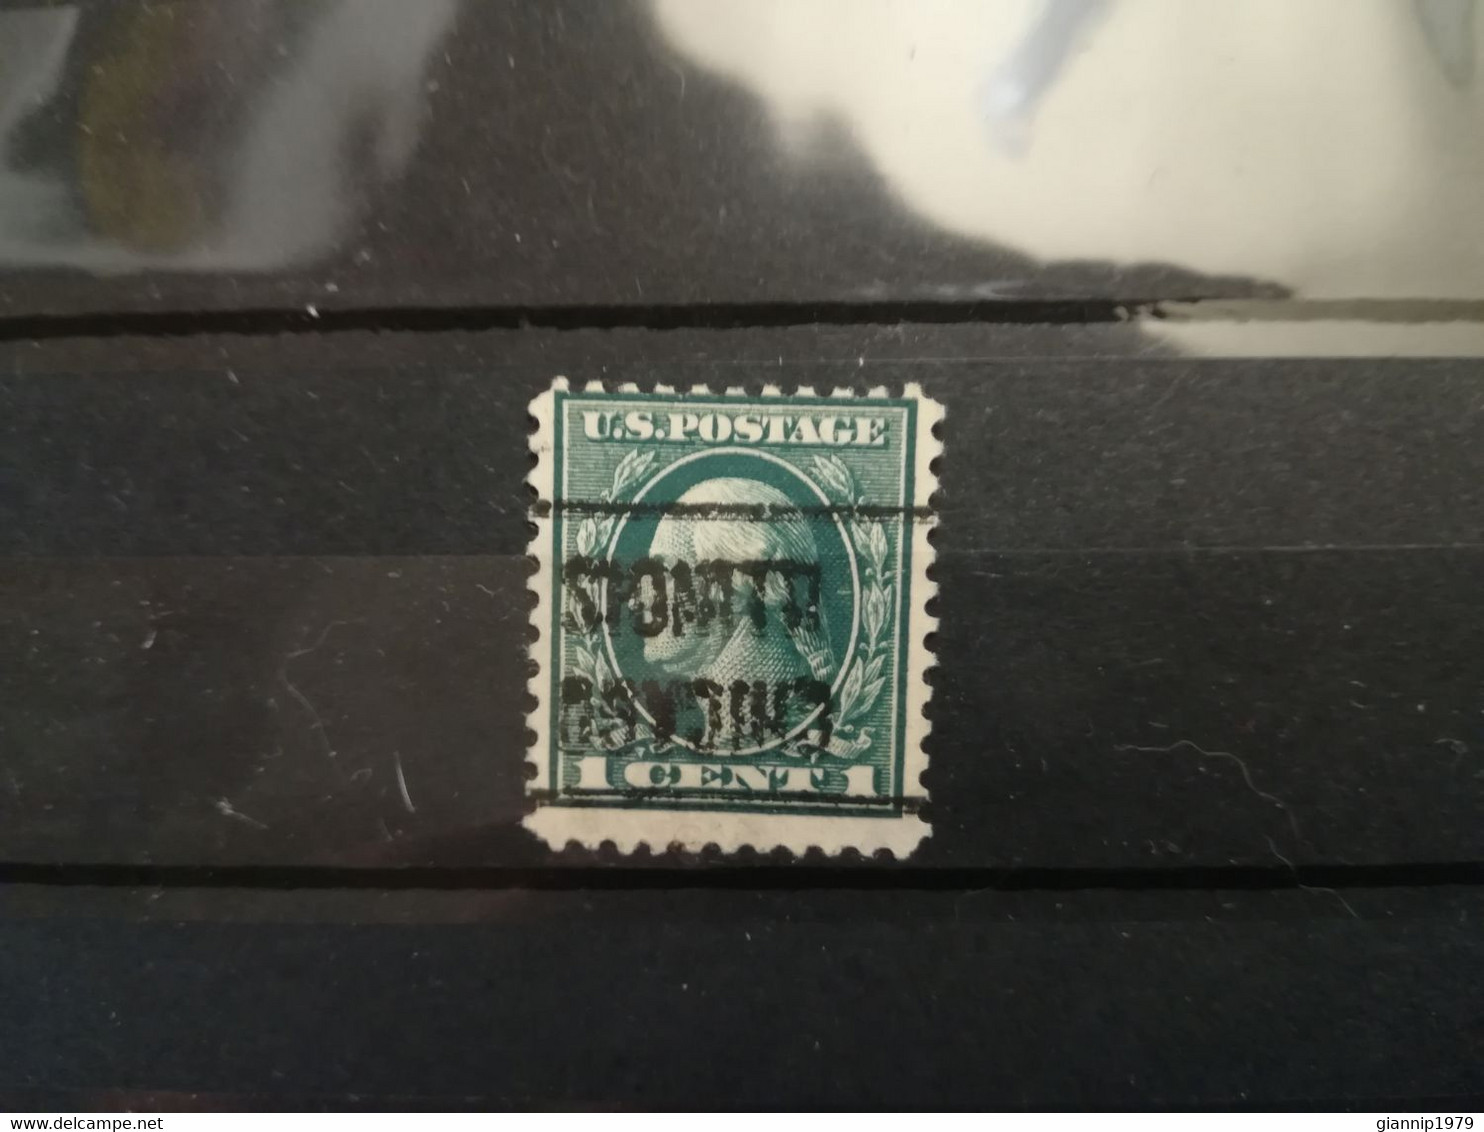 FRANCOBOLLI STAMPS U.S.A. UNITED STATES STATI UNITI 1912 USED SERIE GEORGE WASHINGTON OBLITERE' - Used Stamps